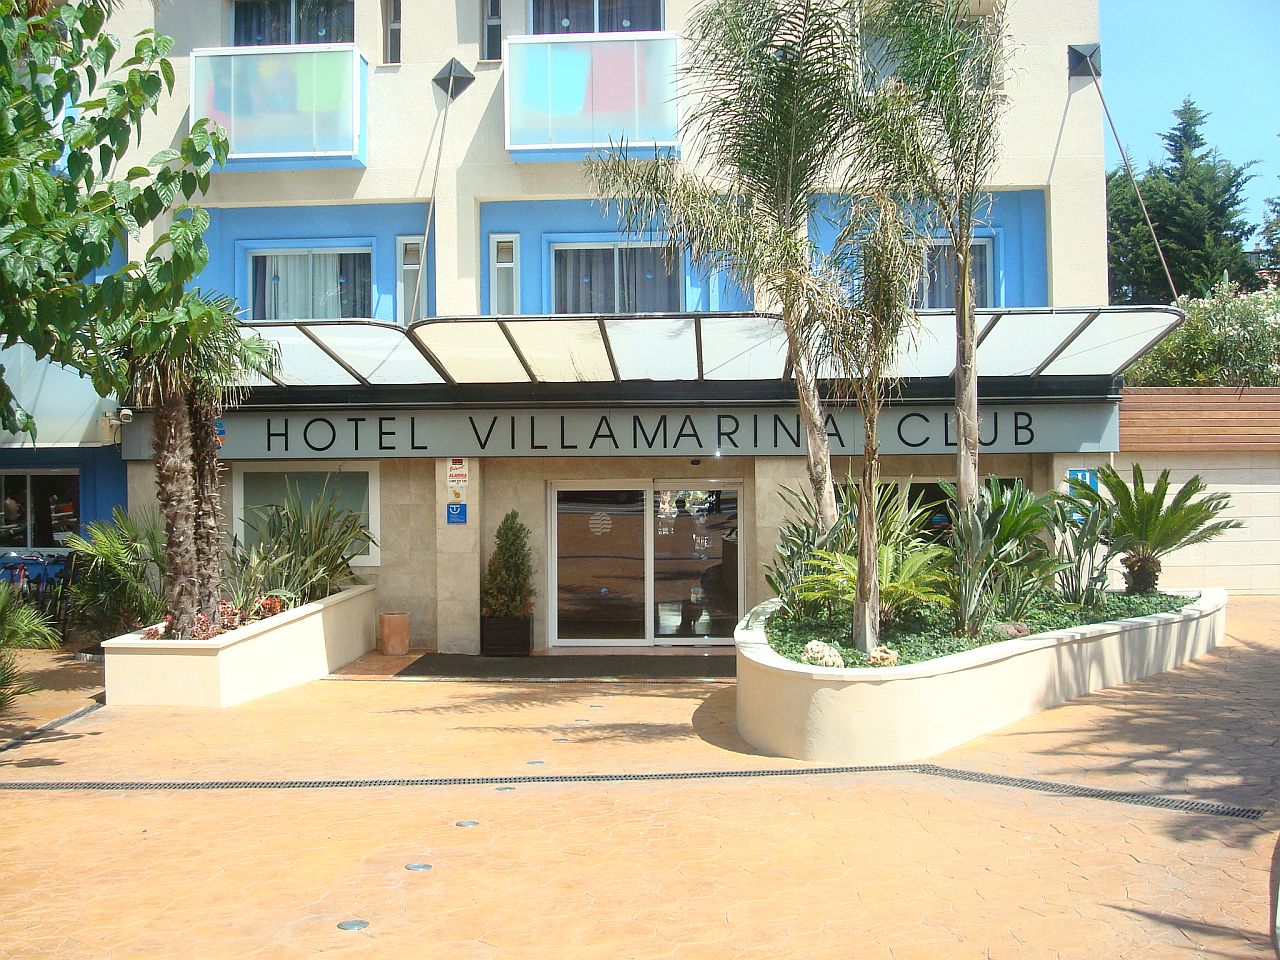 Villamarina Club (hotel)